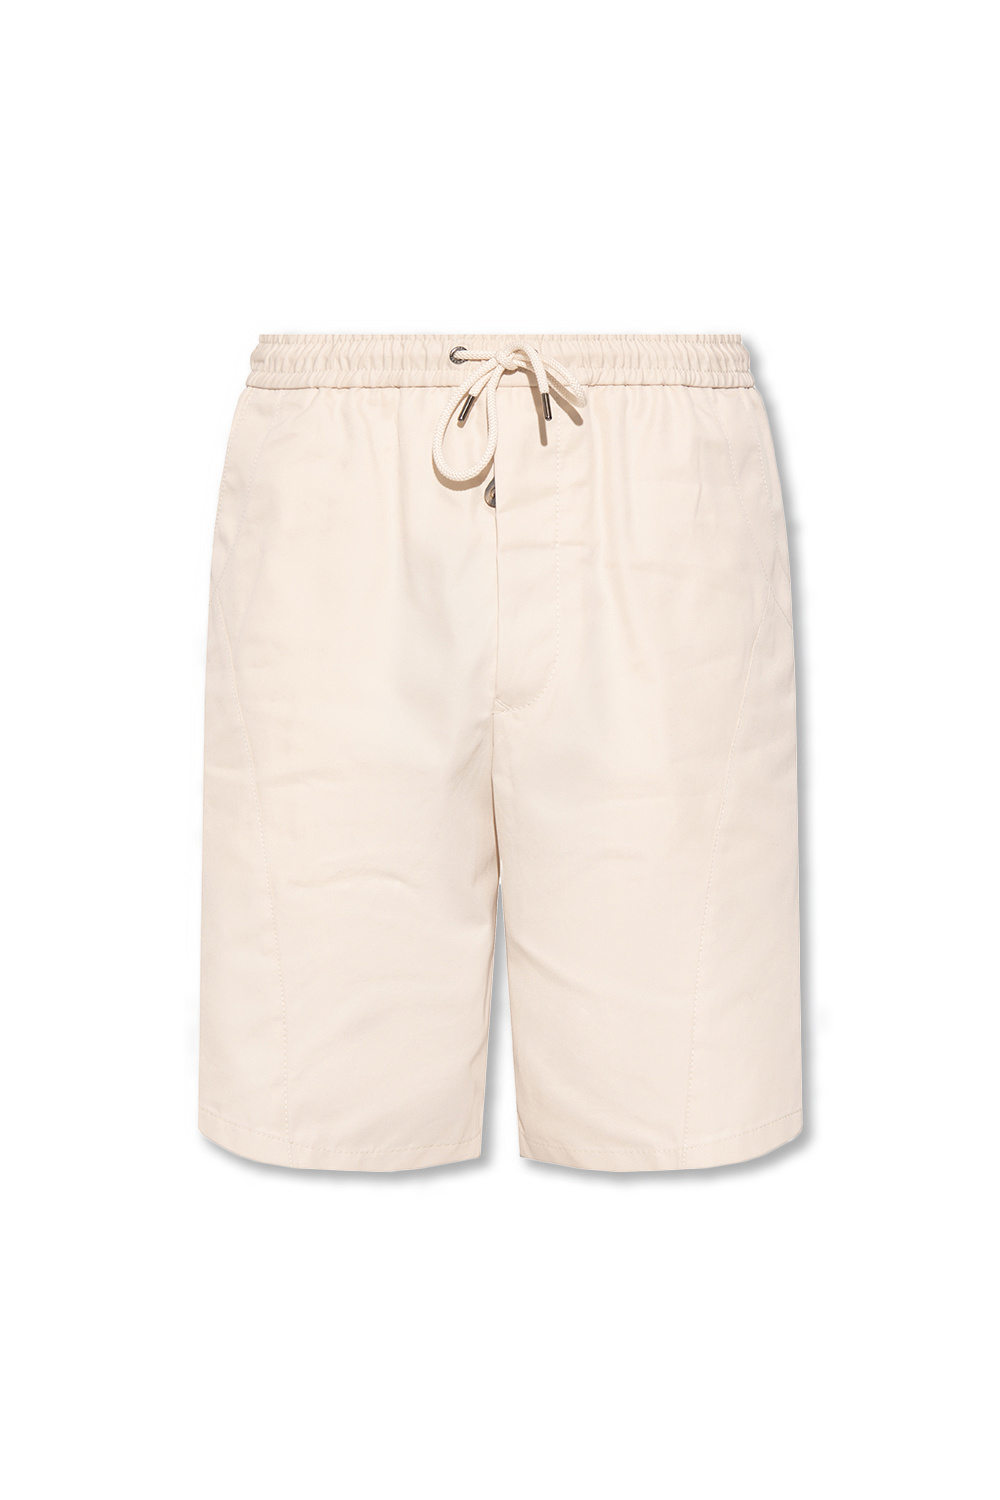 Giorgio Armani ‘Sustainable’ collection shorts | Men's Clothing | Vitkac